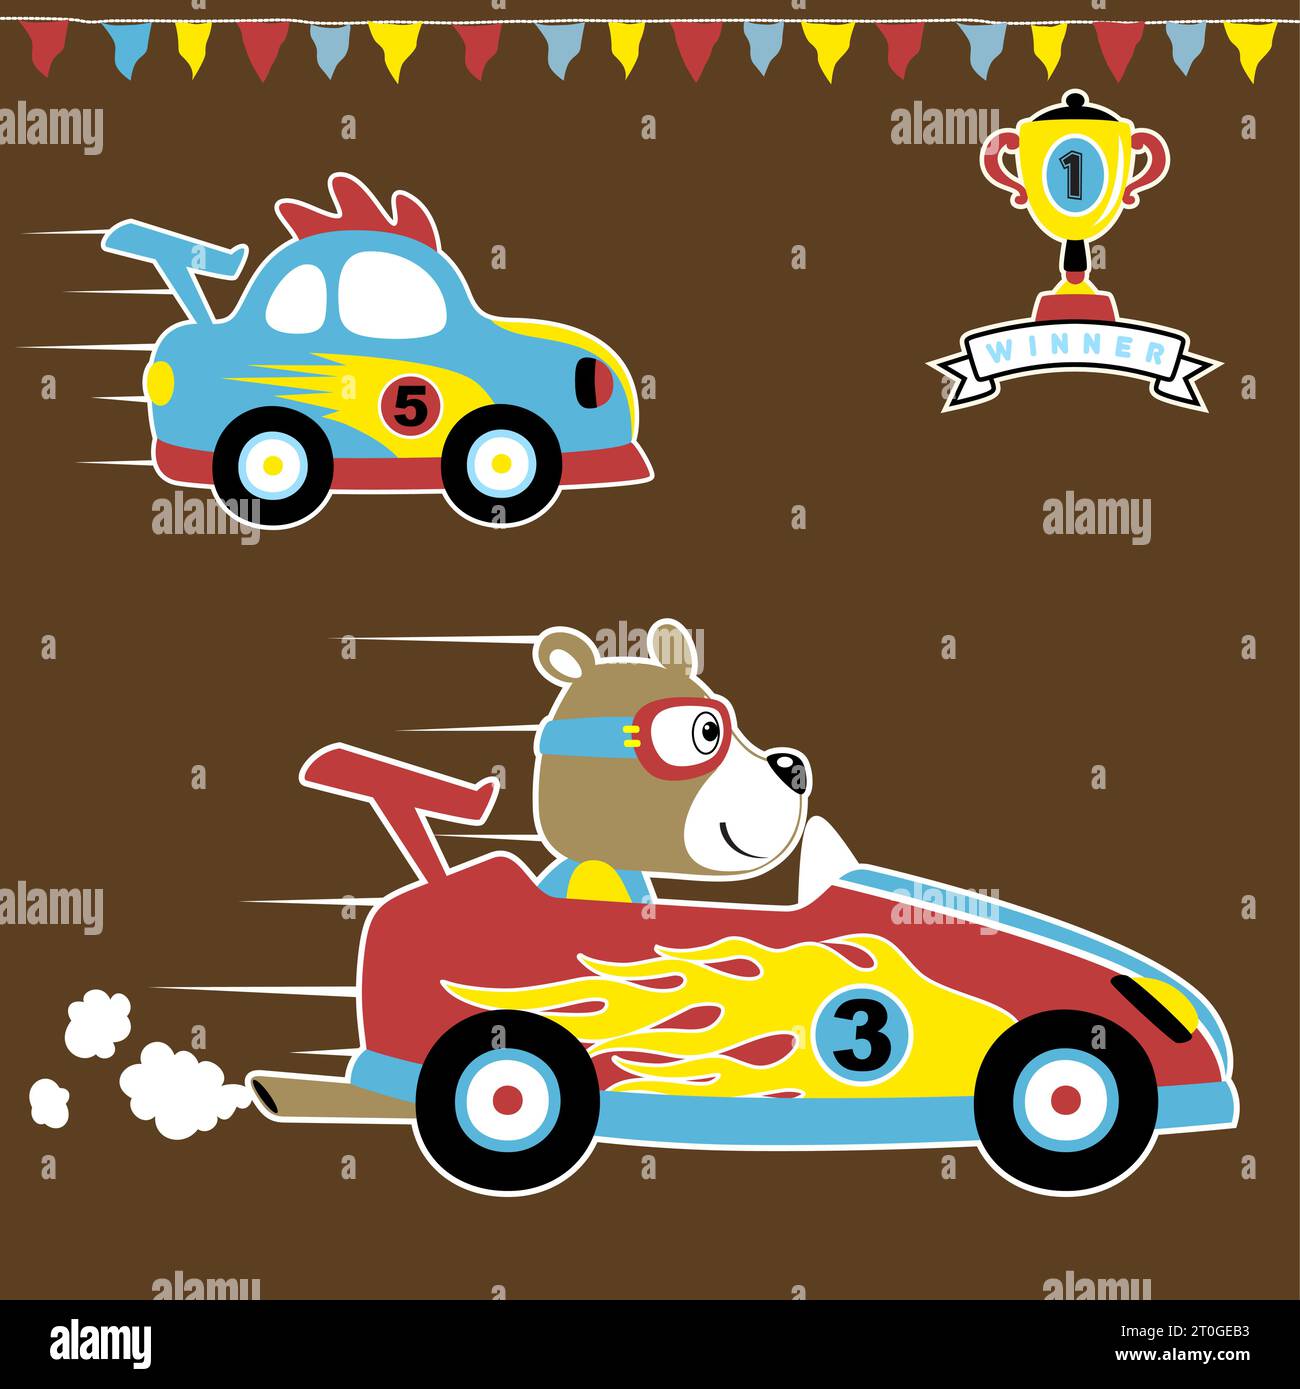 Hot dog racing car metaphor isolated illustration Stock Photo - Alamy